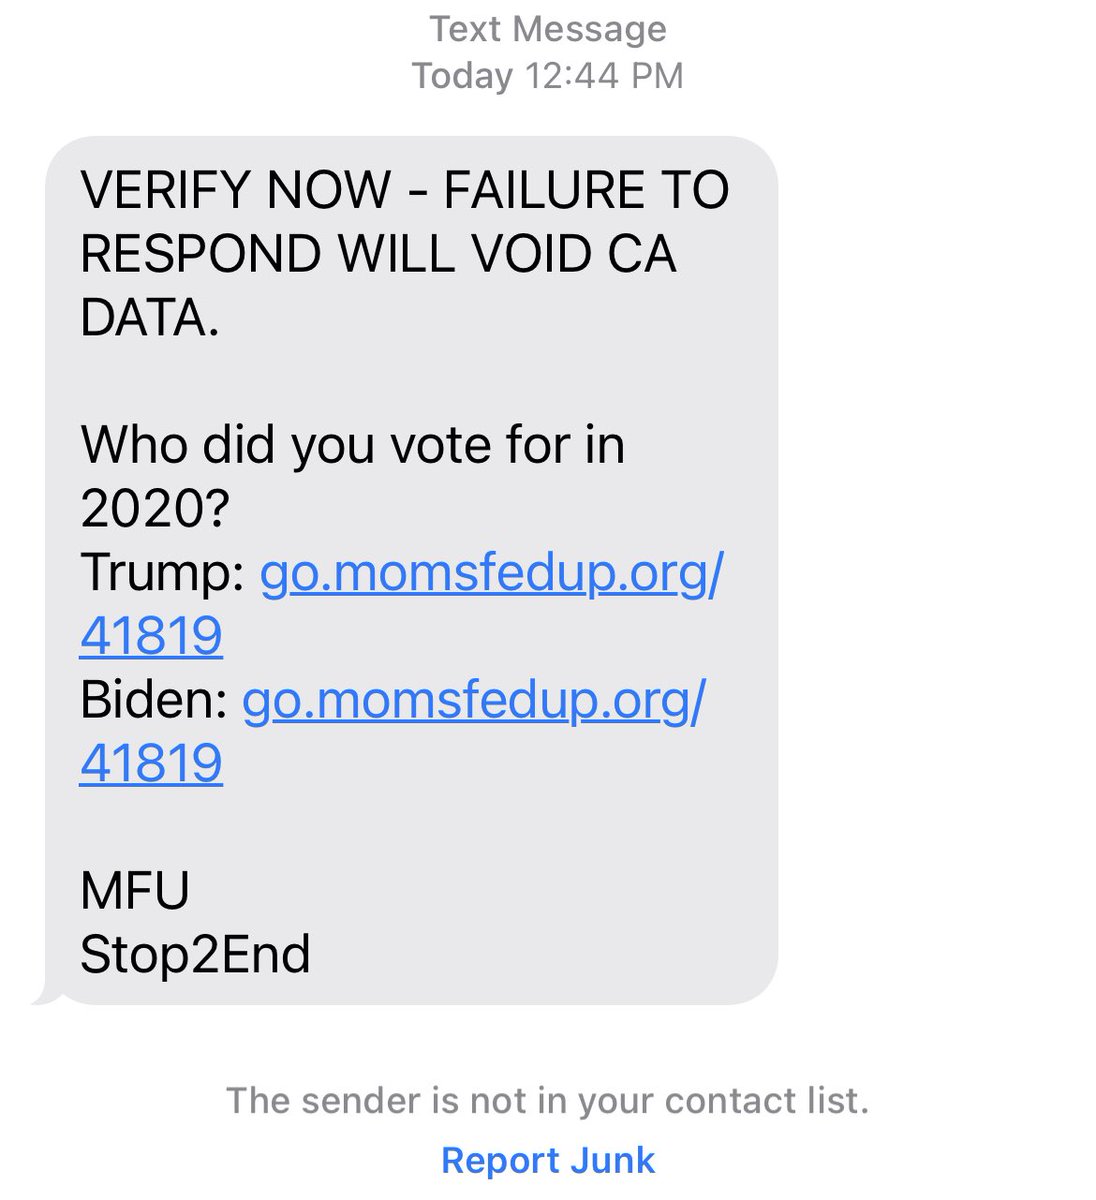 Fake text. Don’t respond. #Voterfraud